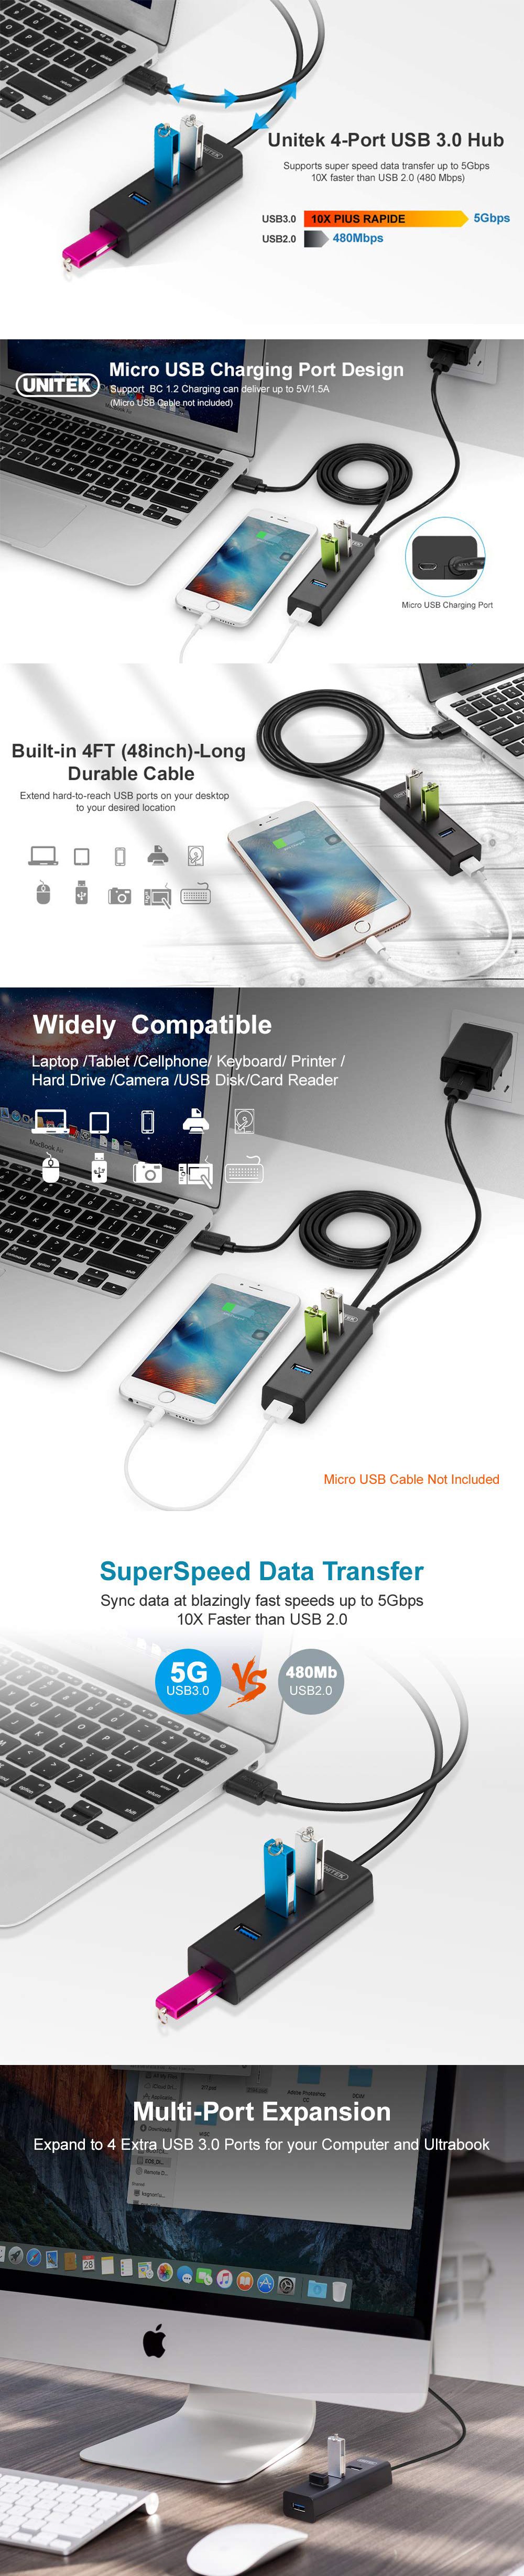 UNITEK-Y-3089-USB30-Hub-with-4-Ports-USB-Hub-Extender-Extension-Connector-for-PhoneTabletComputer-Su-1568776